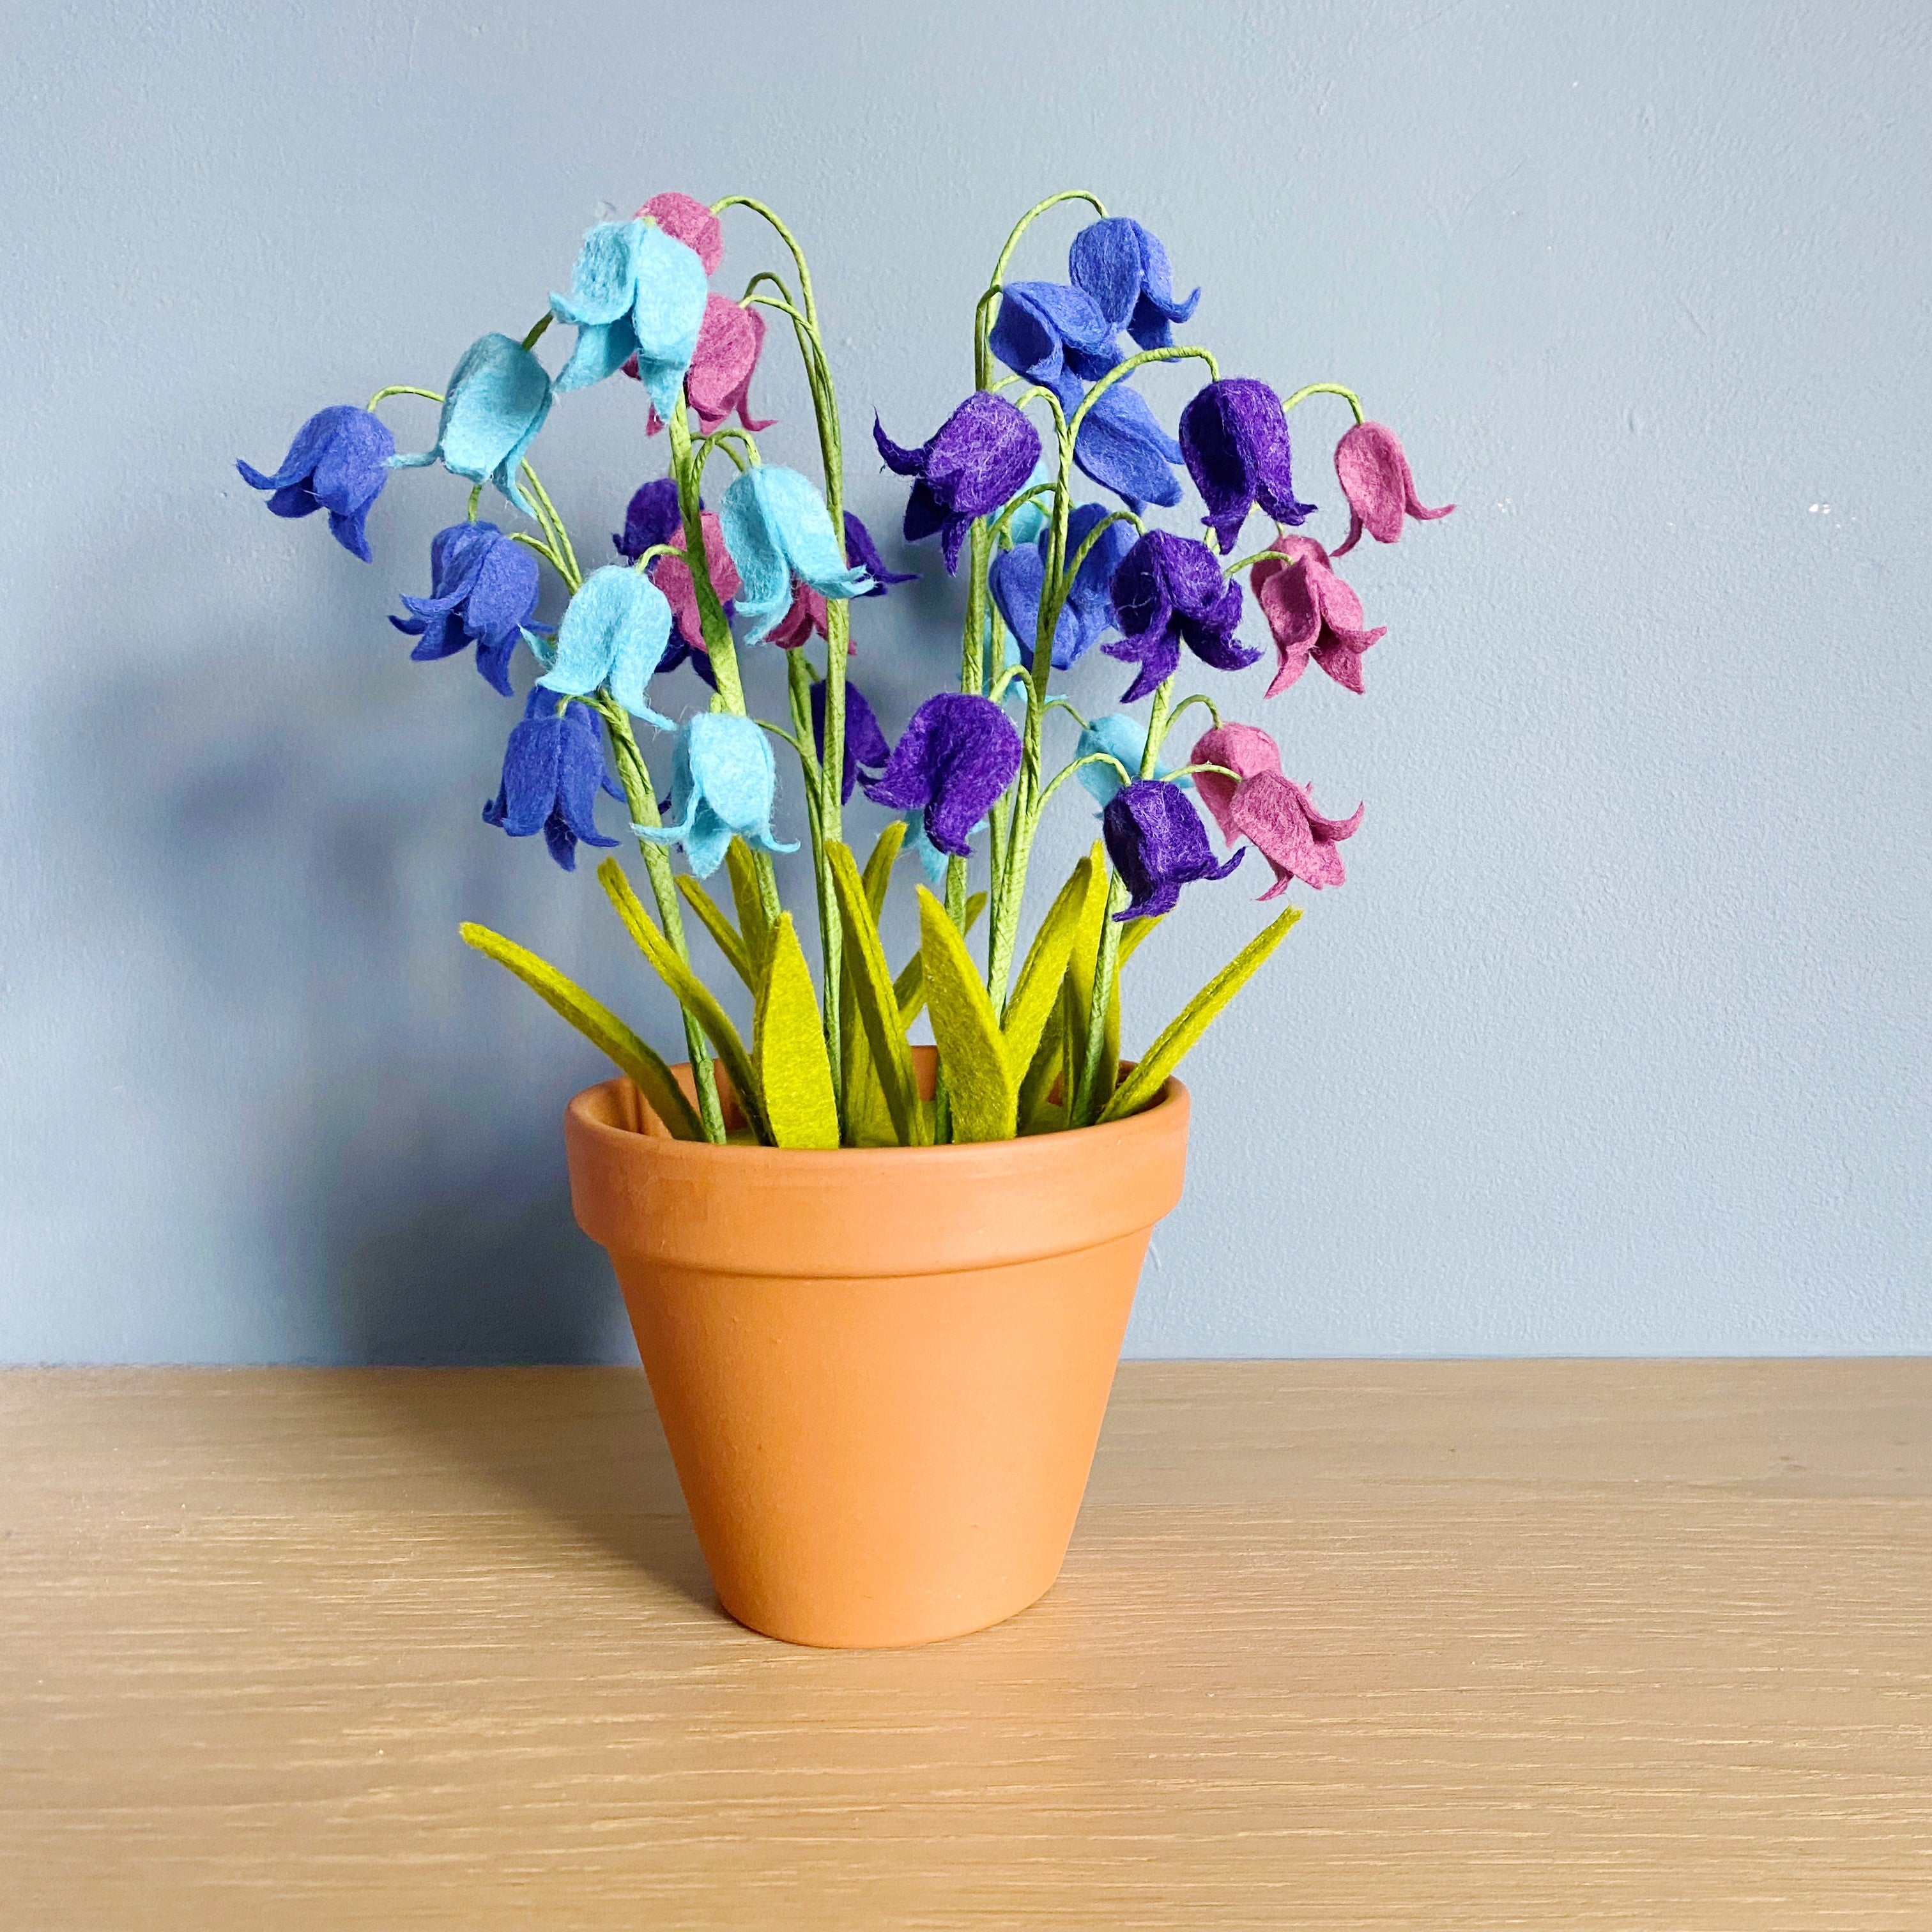 Learn to make felt flower bluebells with The Handmade Florist